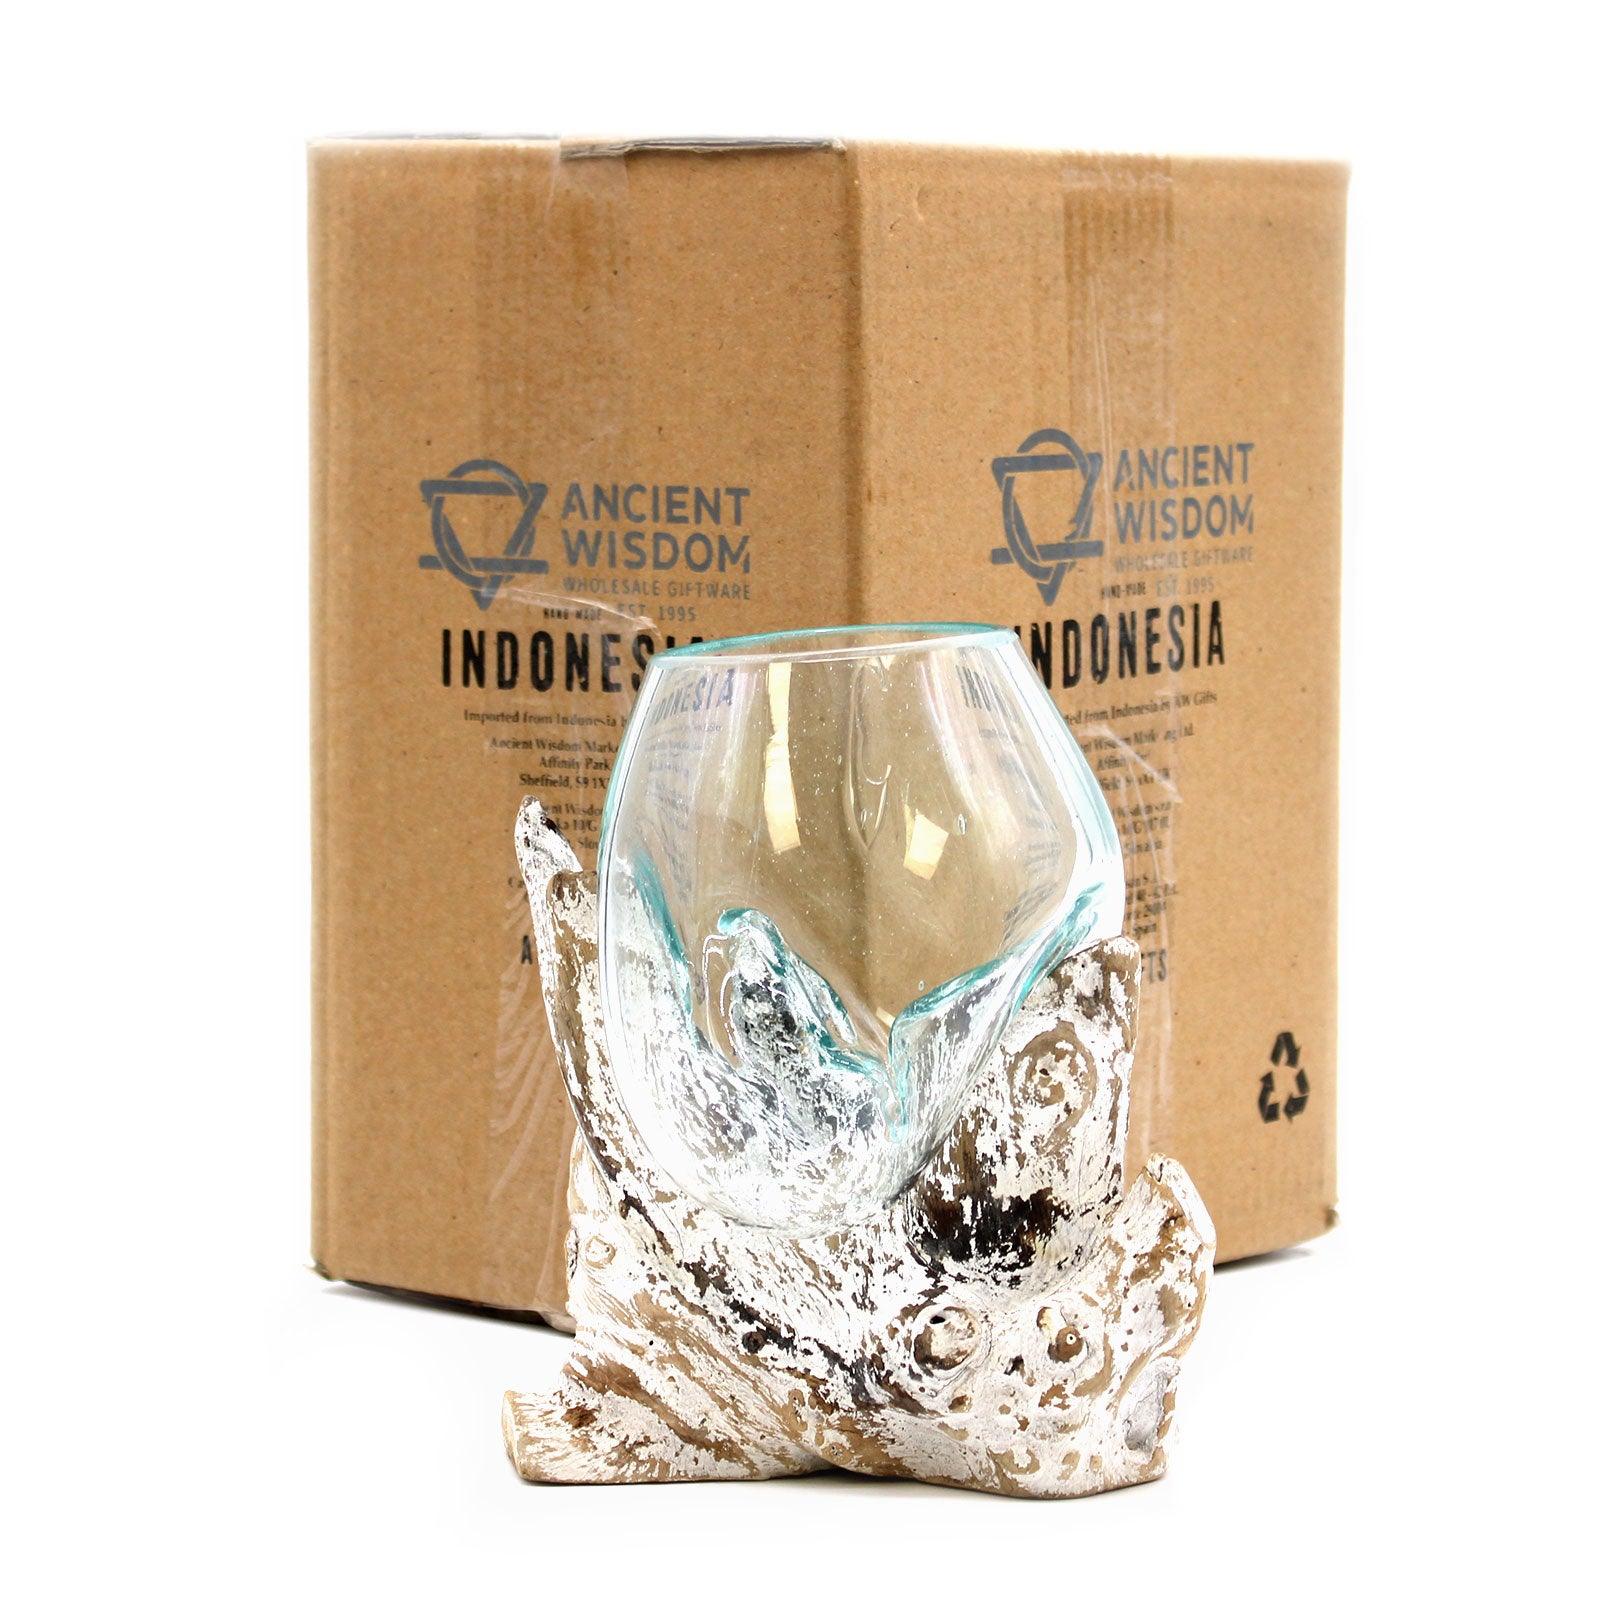 Molten Glass on Whitewash Wood - Medium Bowl - DuvetDay.co.uk